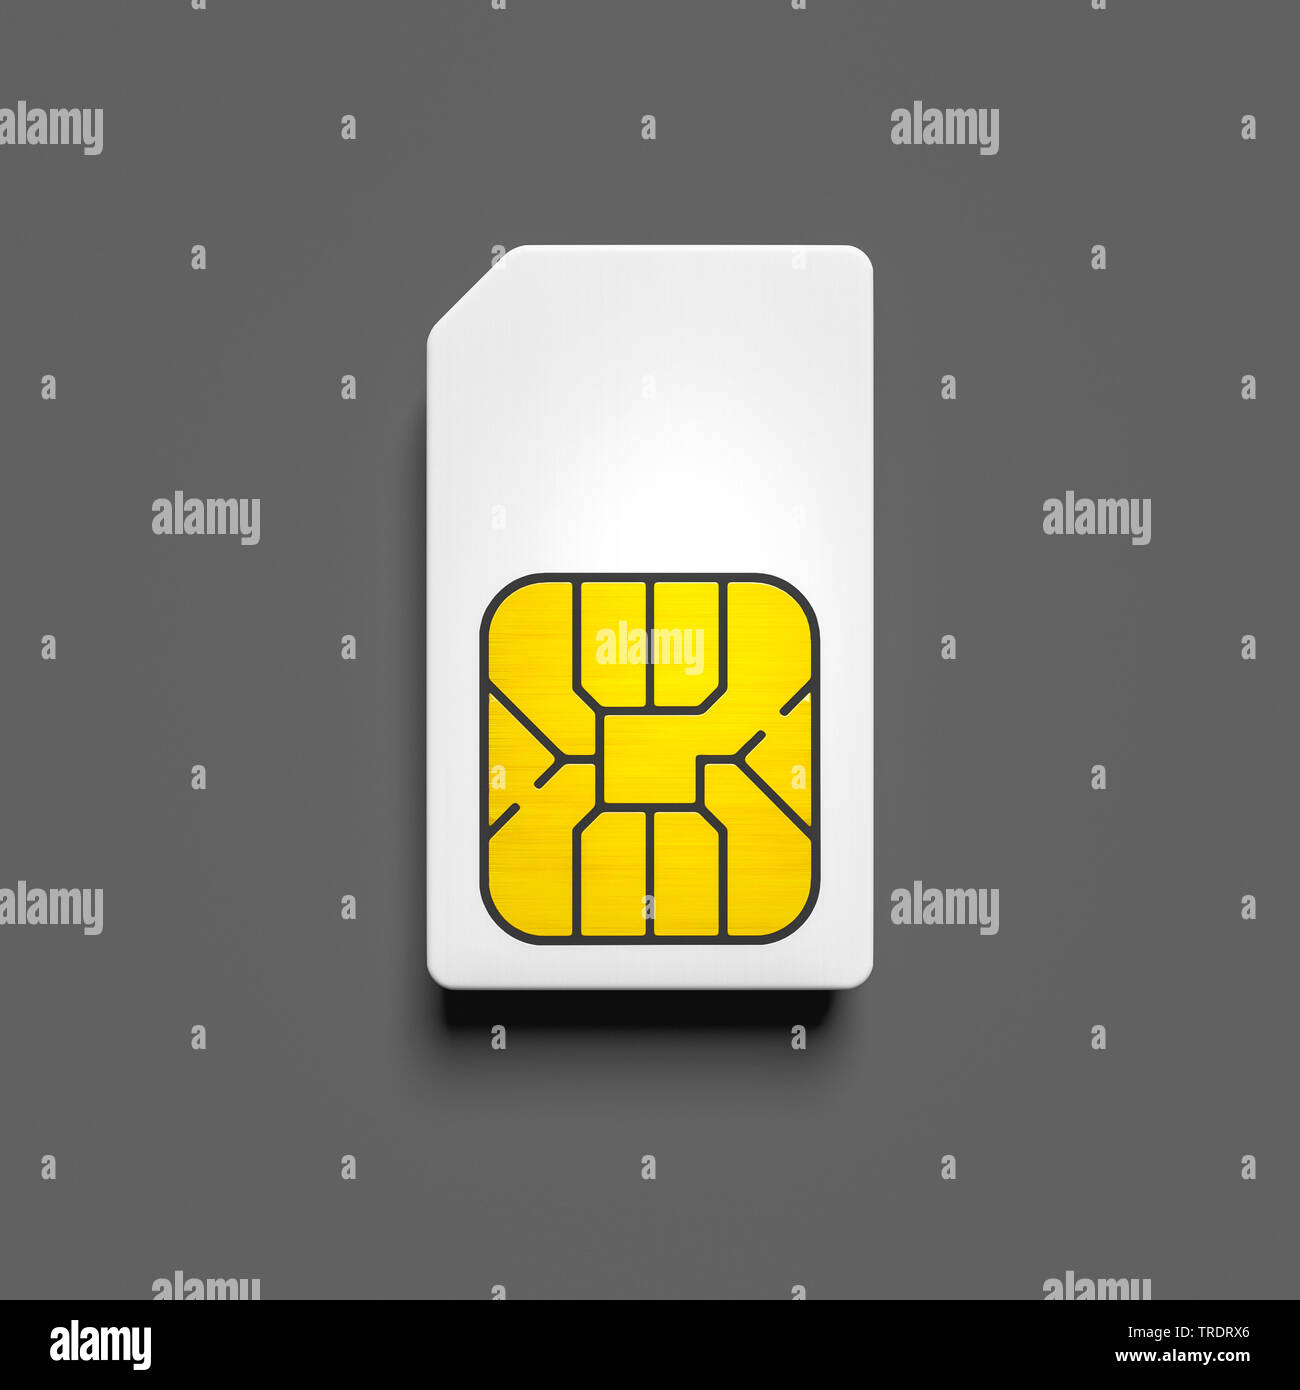 sim card, computer graphic Stock Photo - Alamy